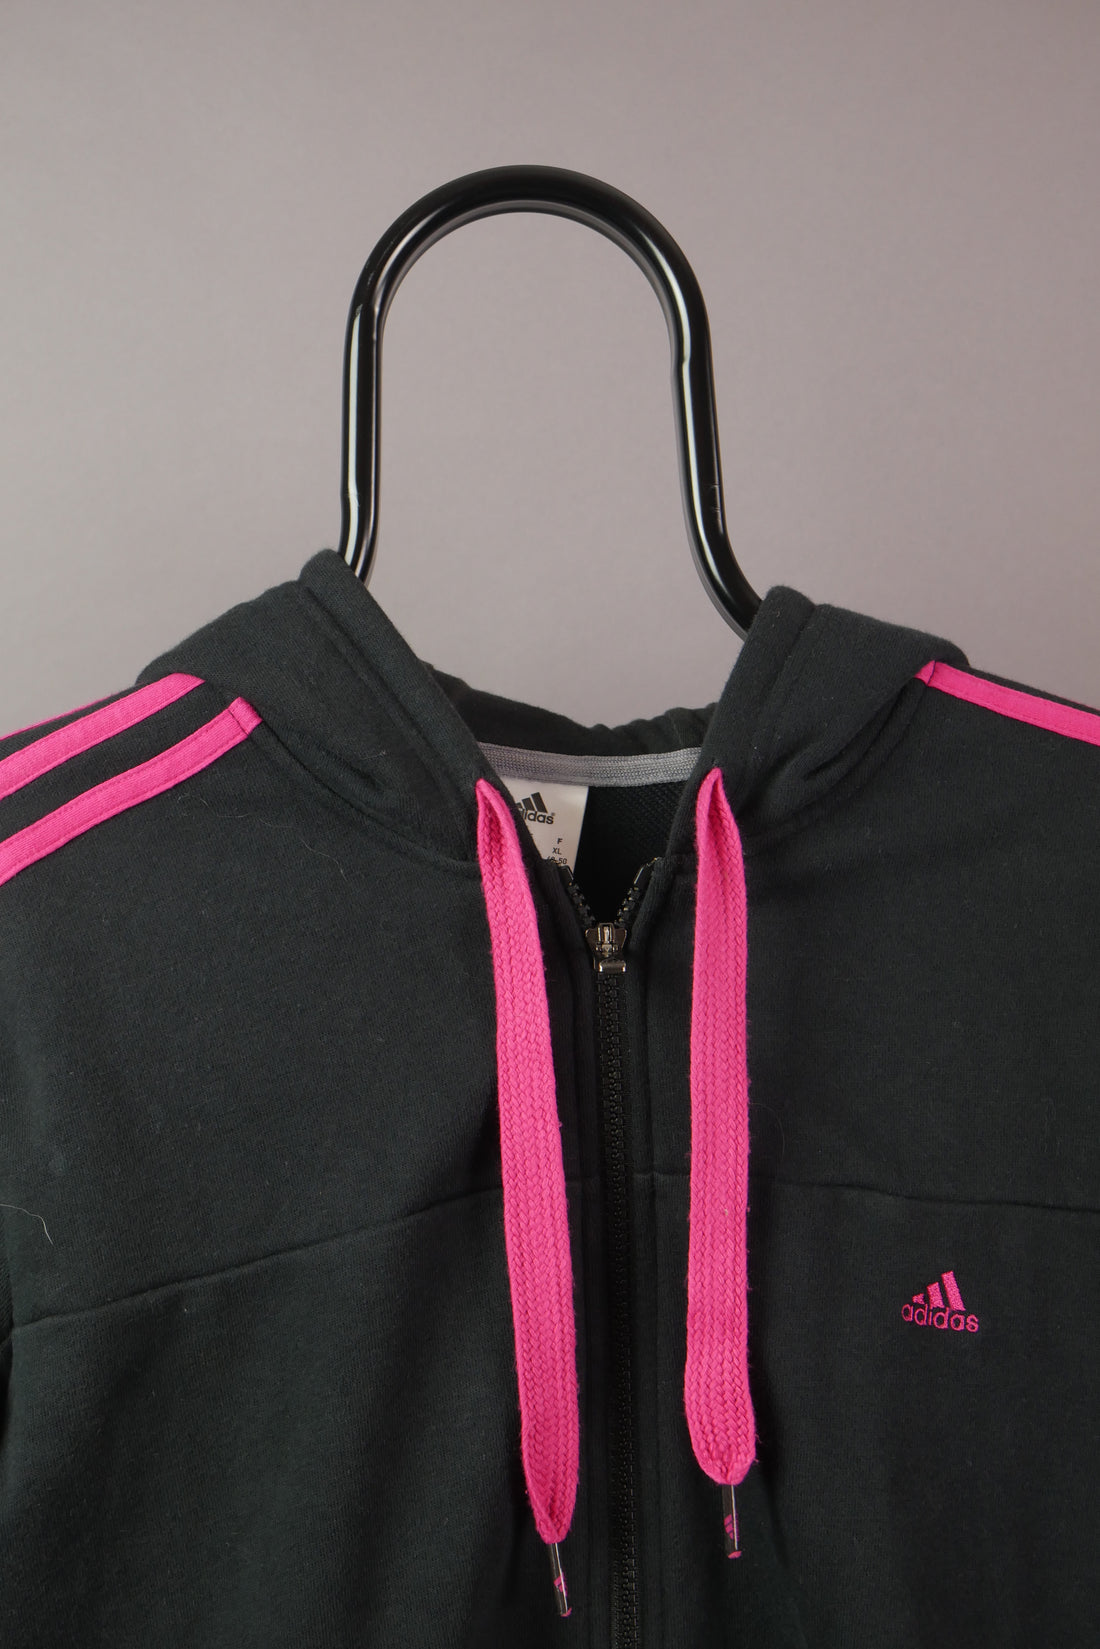 The Adidas Full Zip Sweatshirt (XL)